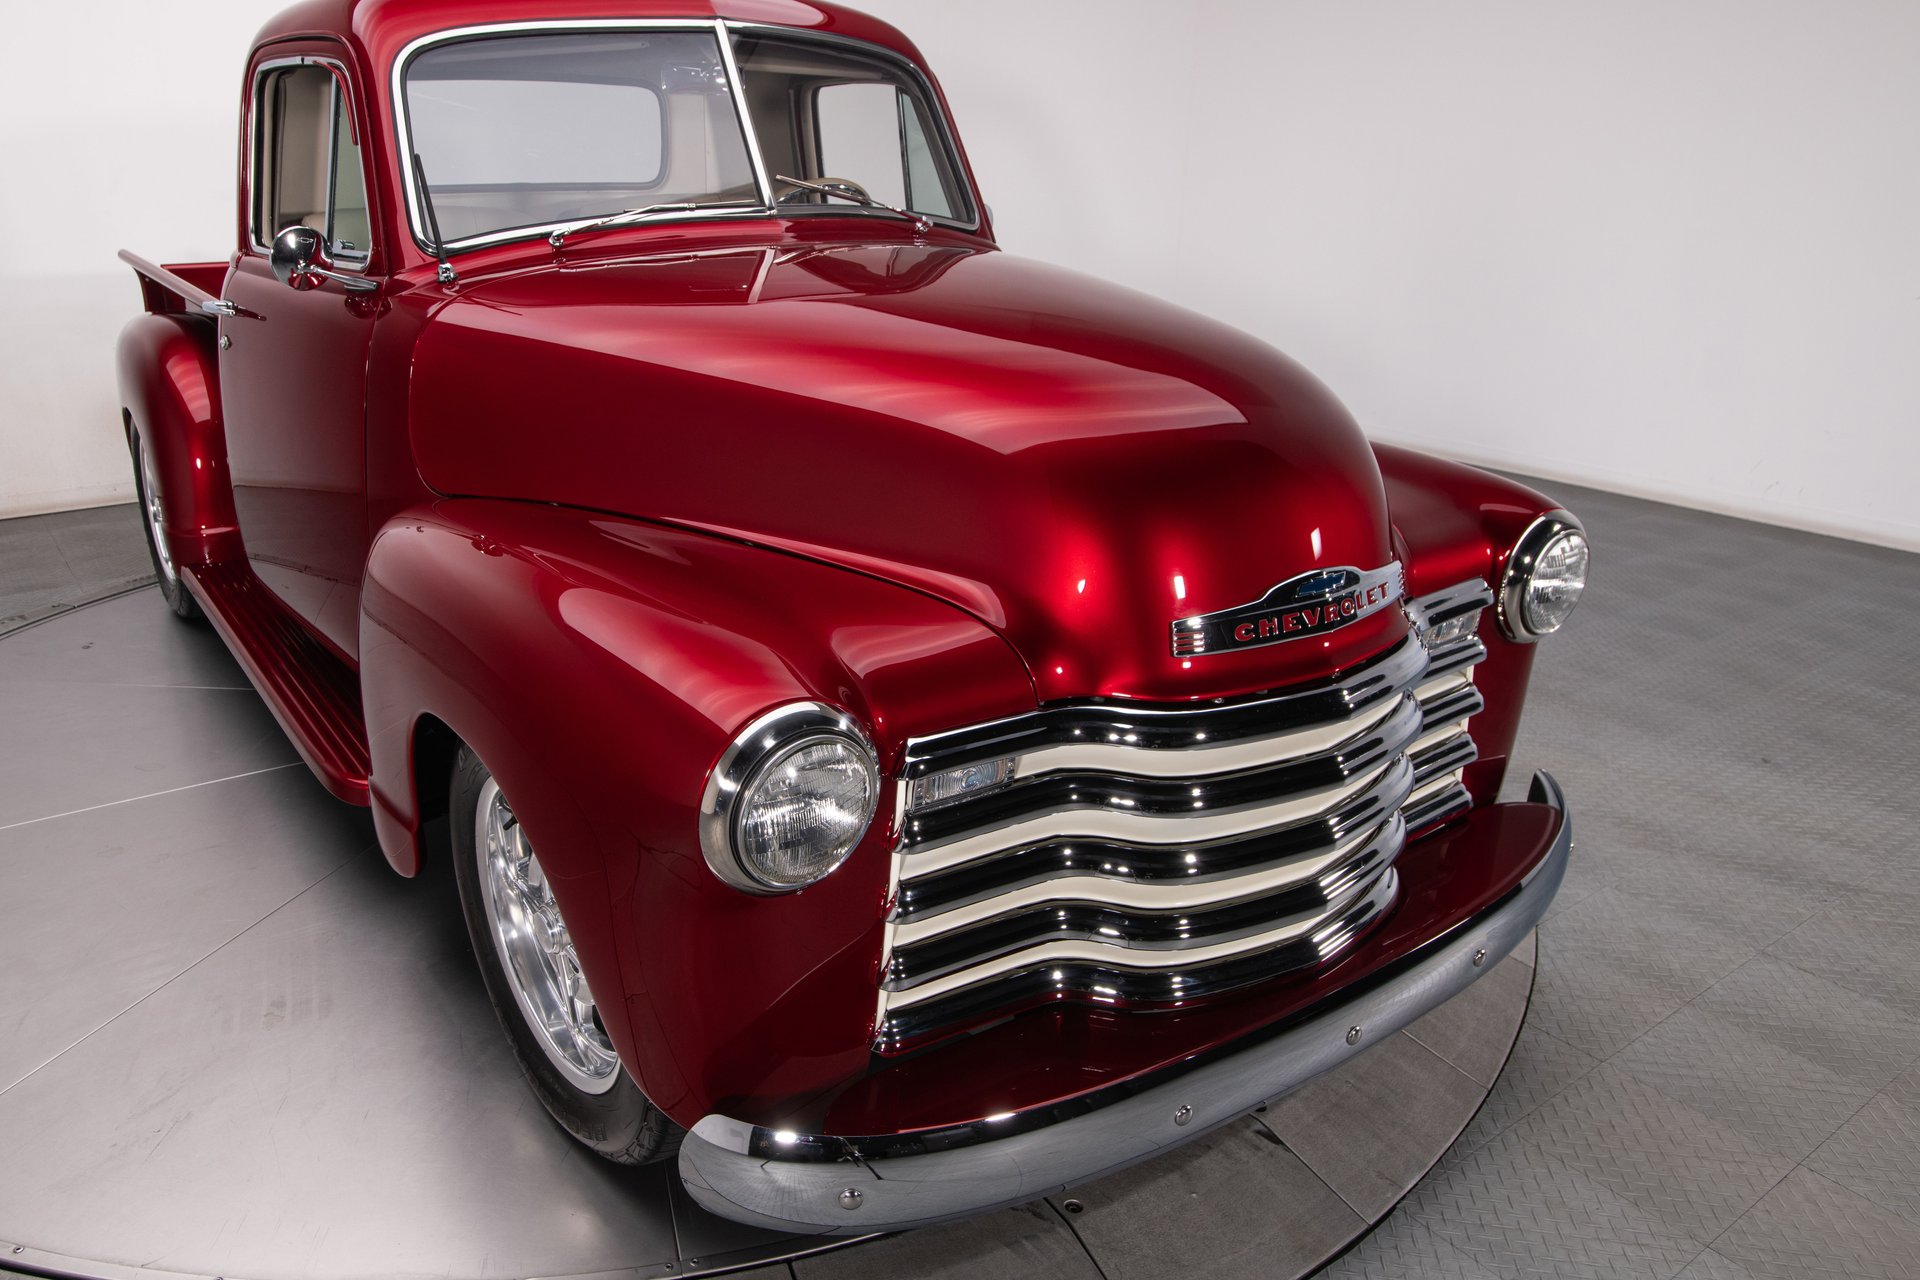 1951 chevrolet 3100 pickup truck